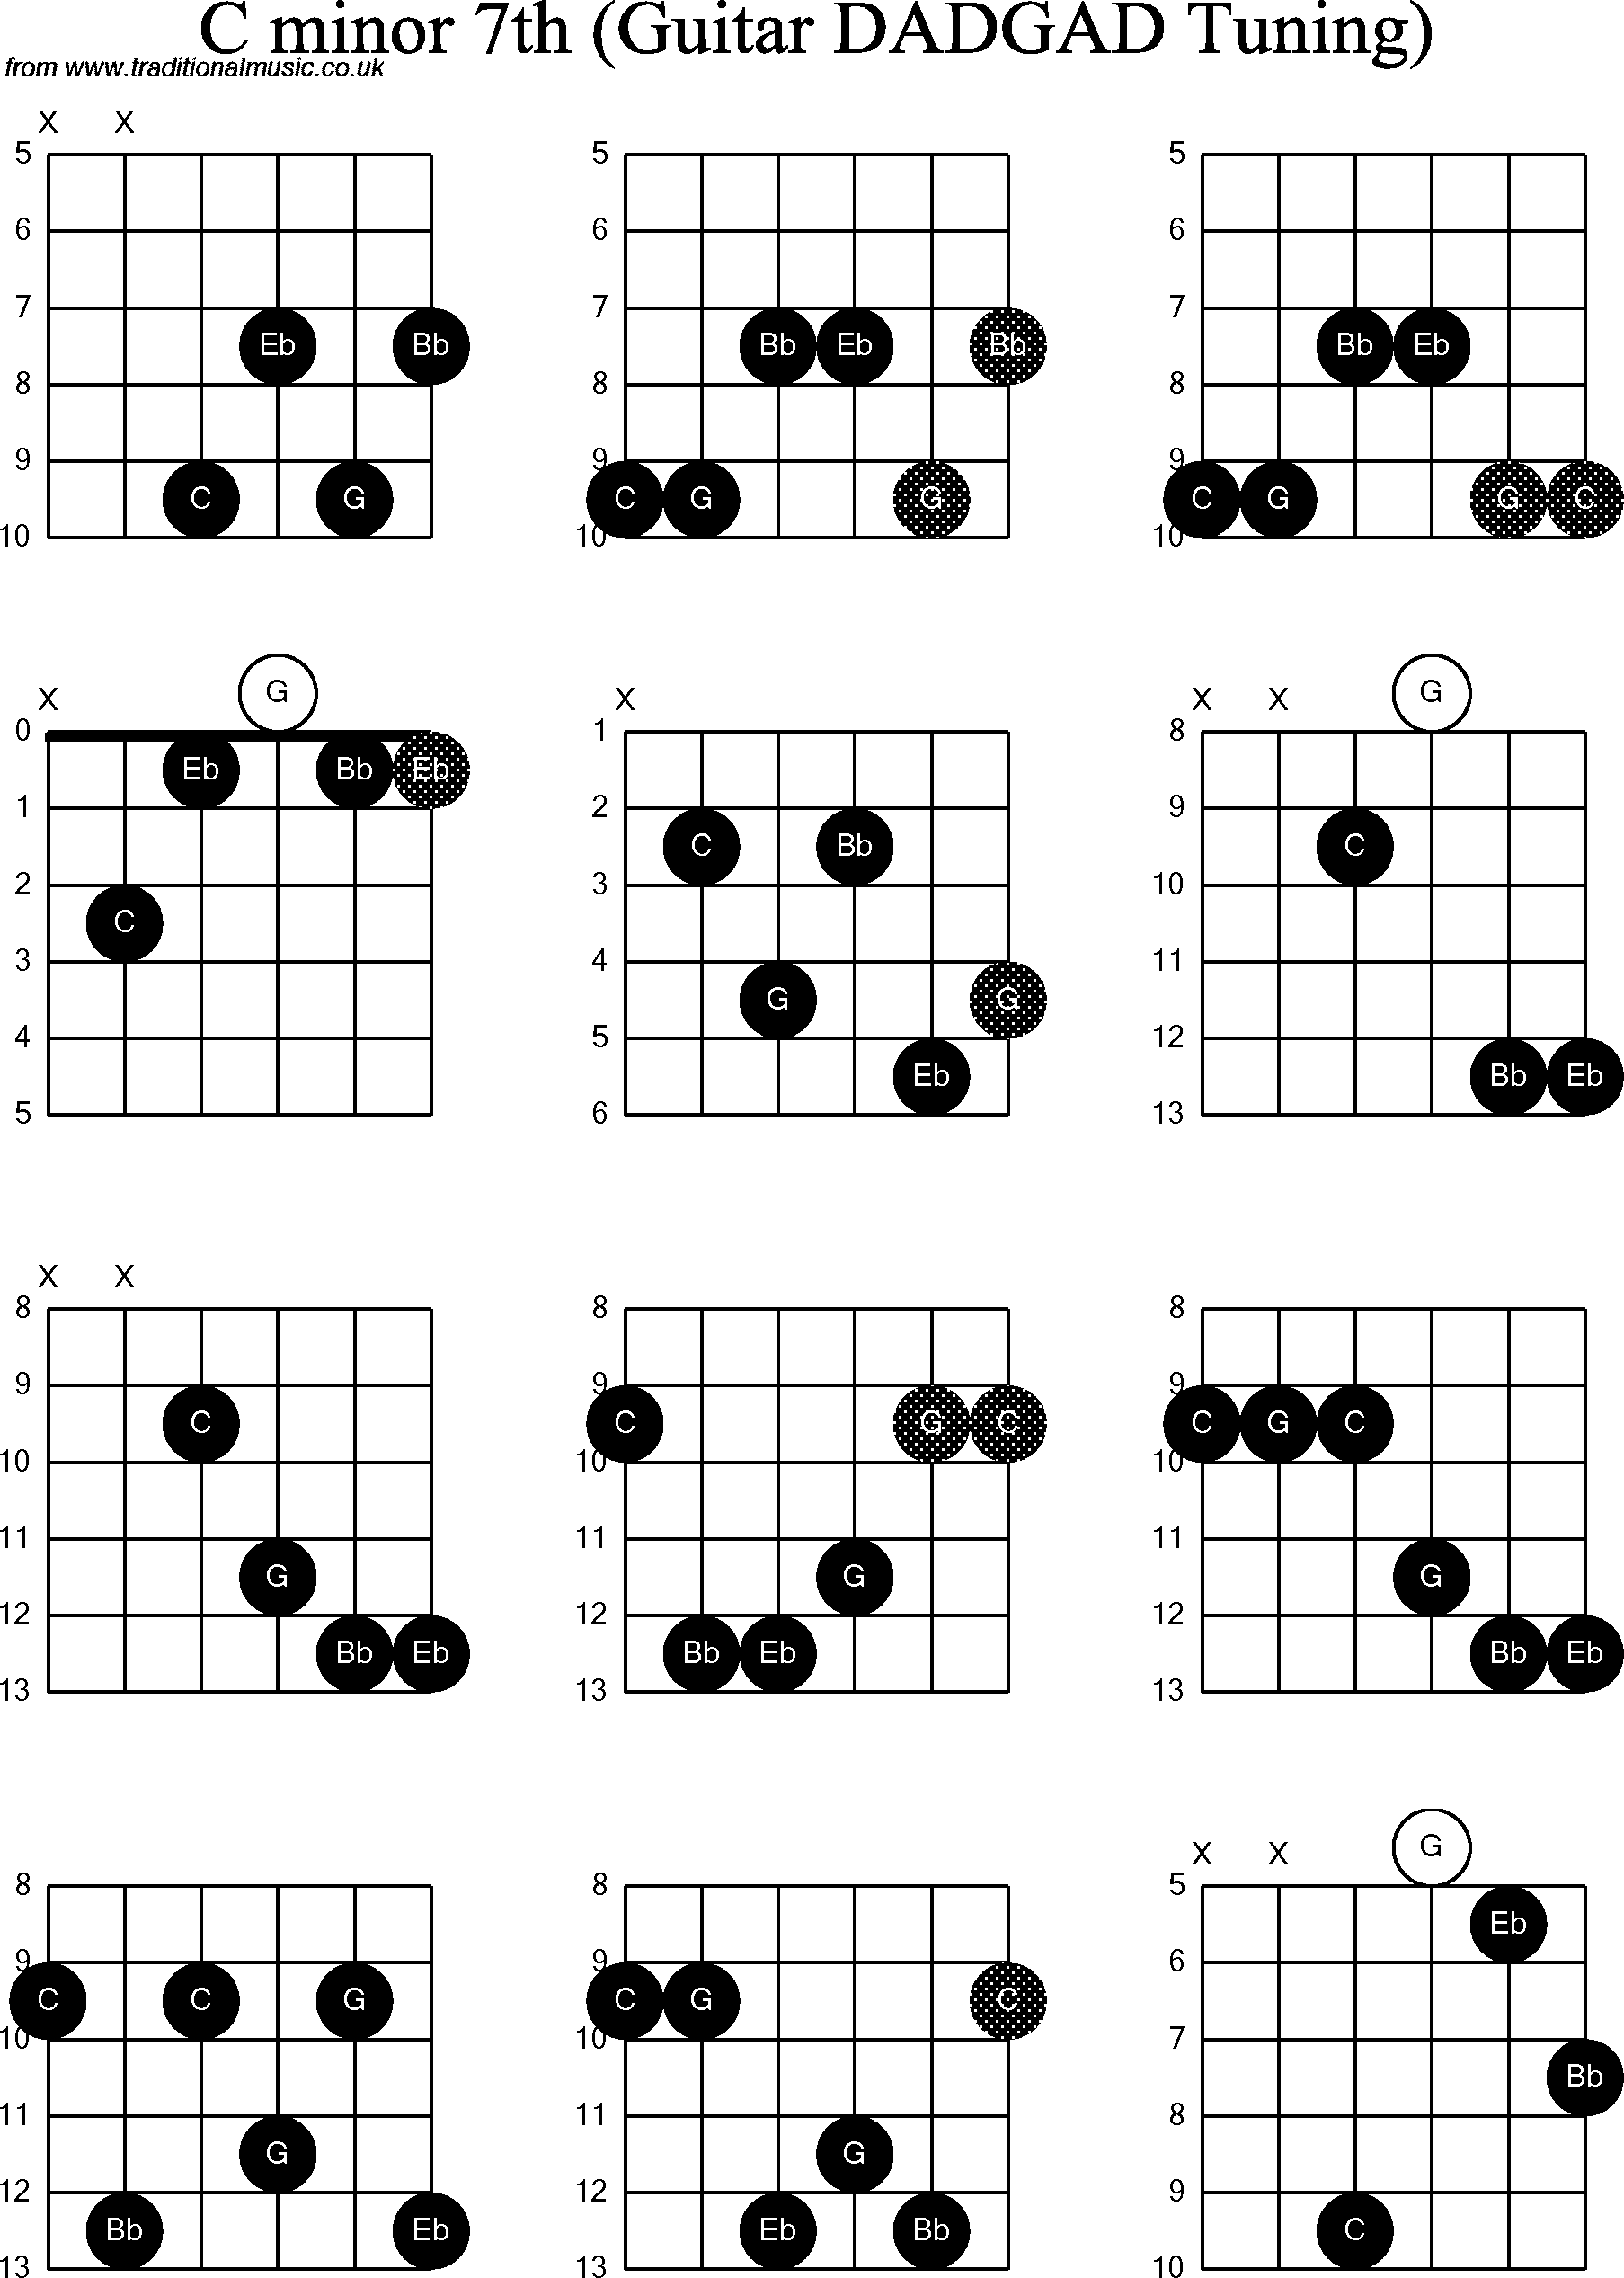 Chord Diagrams D Modal Guitar Dadgad C Minor7th